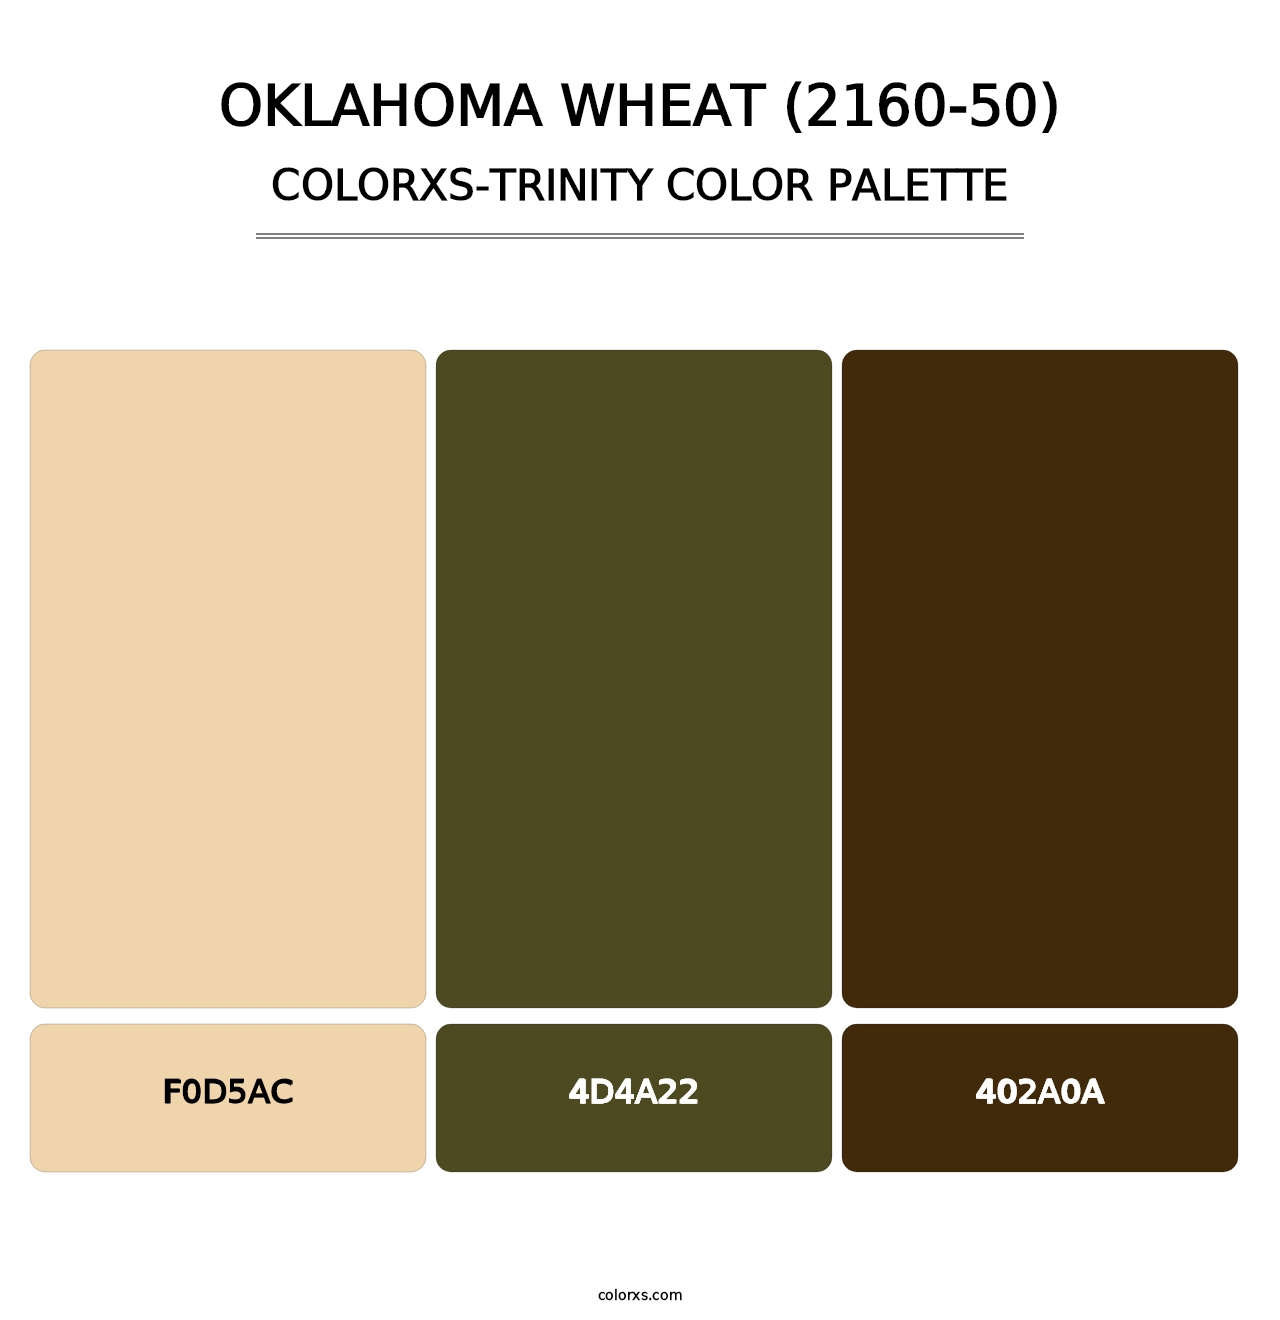 Oklahoma Wheat (2160-50) - Colorxs Trinity Palette